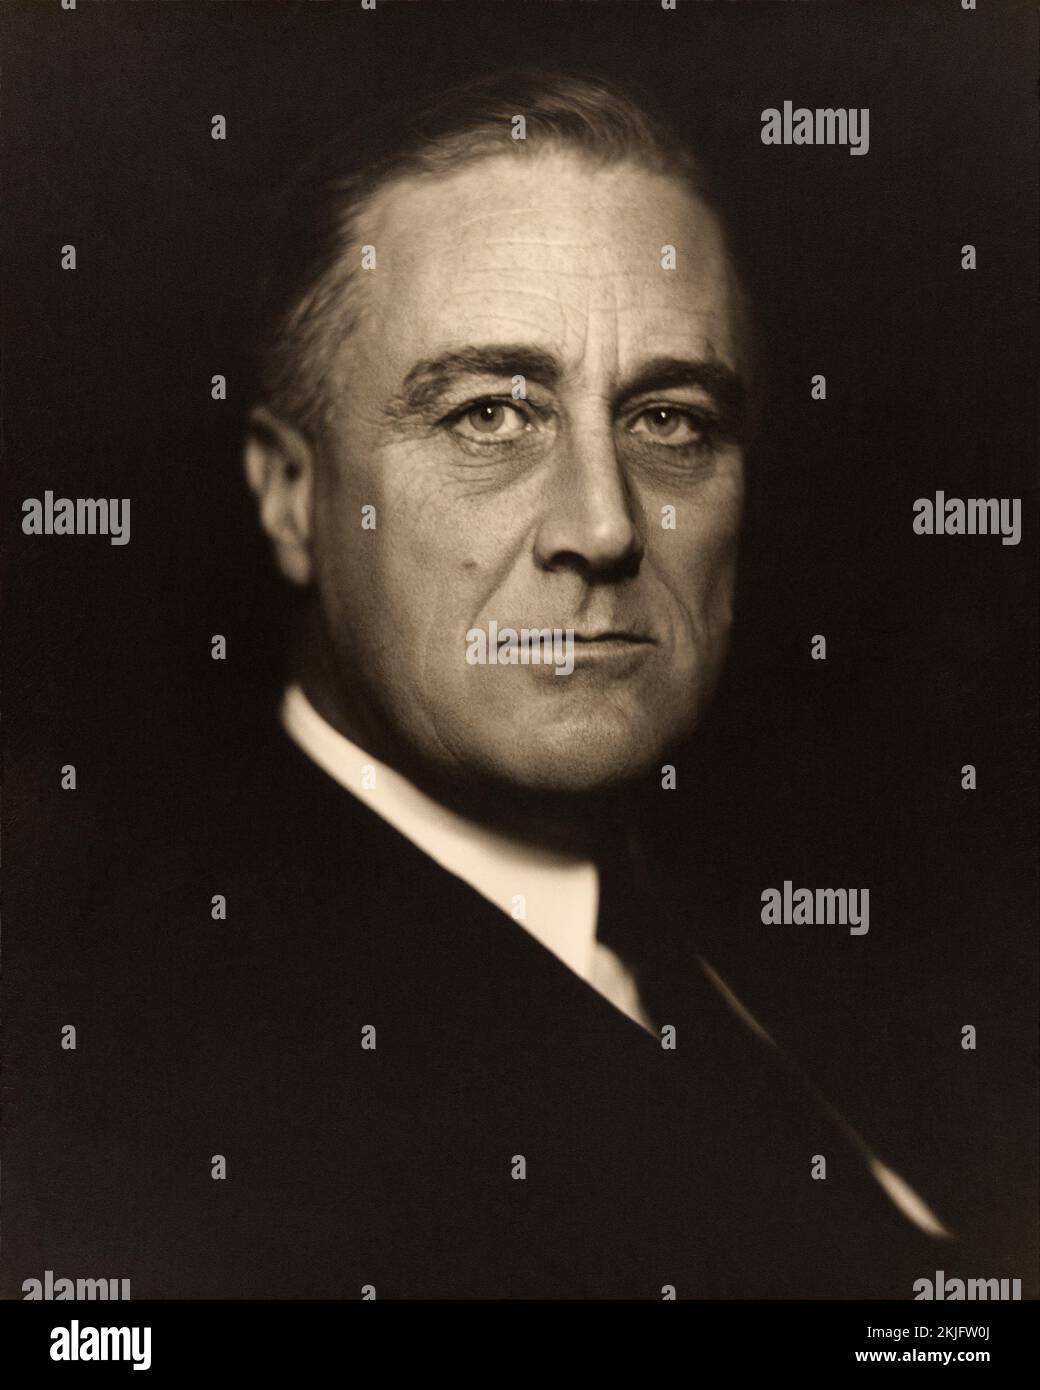 A portrait of US President Franklin D Roosevelt. Stock Photo